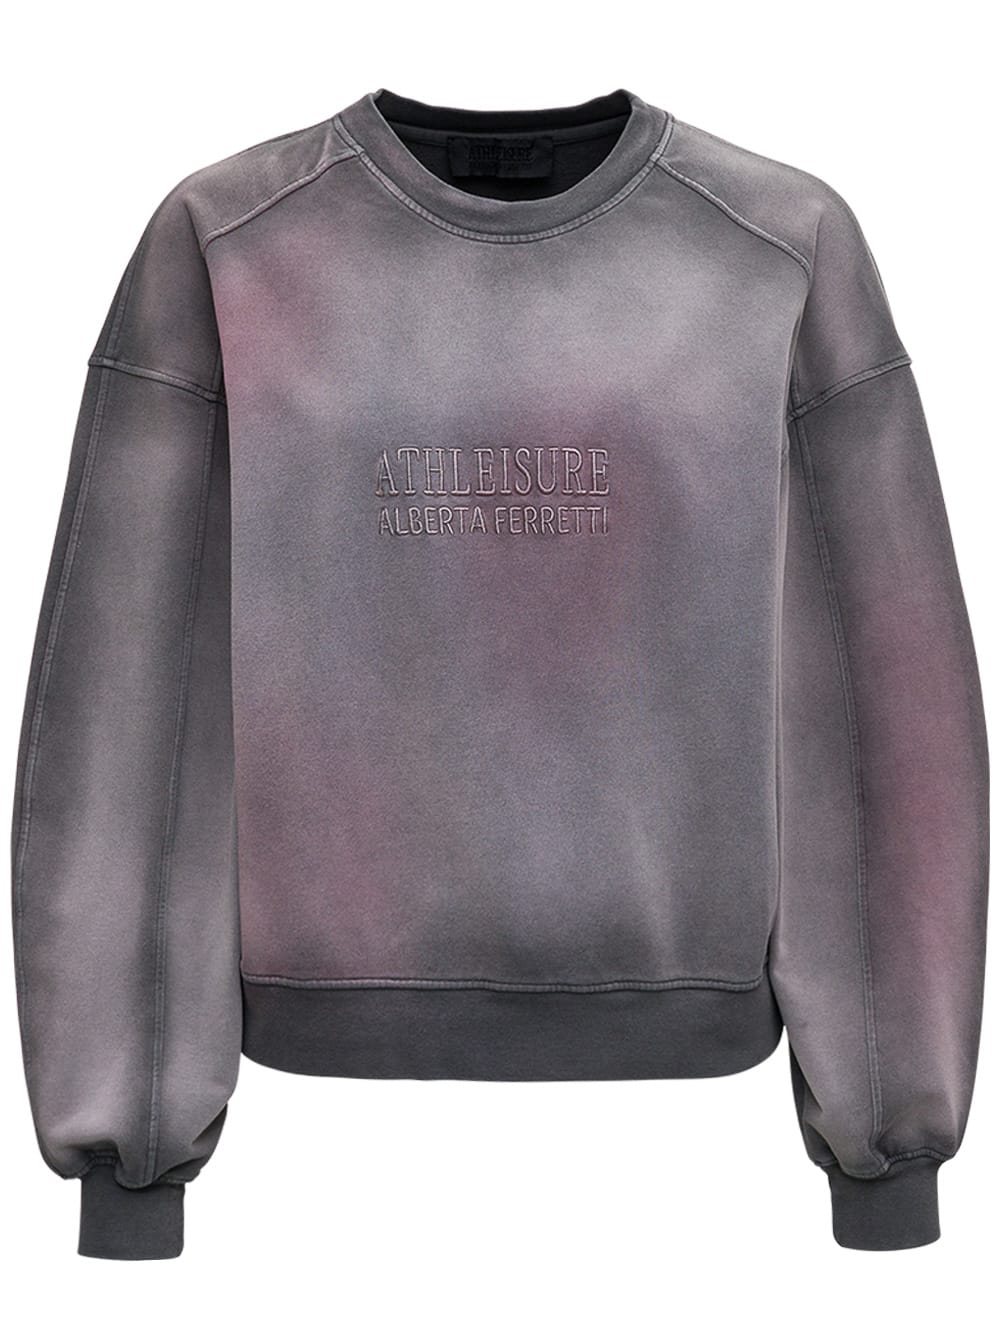 Alberta Ferretti Grey Cotton Jersey Sweatshirt